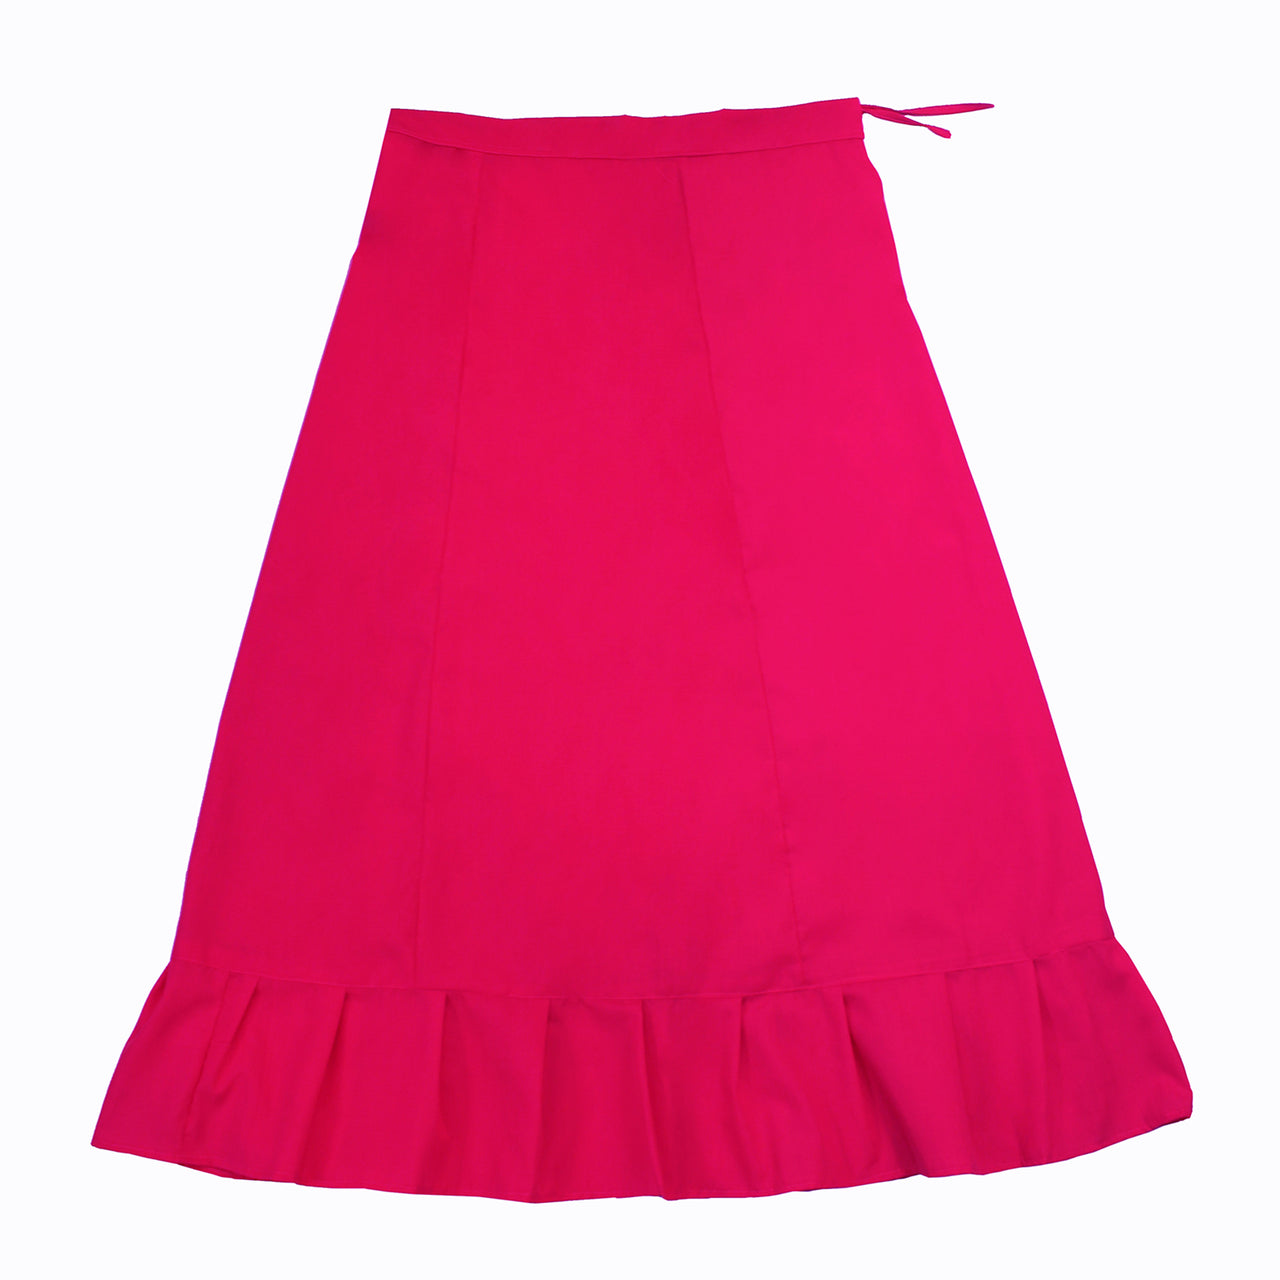 Cerise Pink - Sari (Saree) Petticoat - Available in S, M, L & XL - Underskirts For Sari's